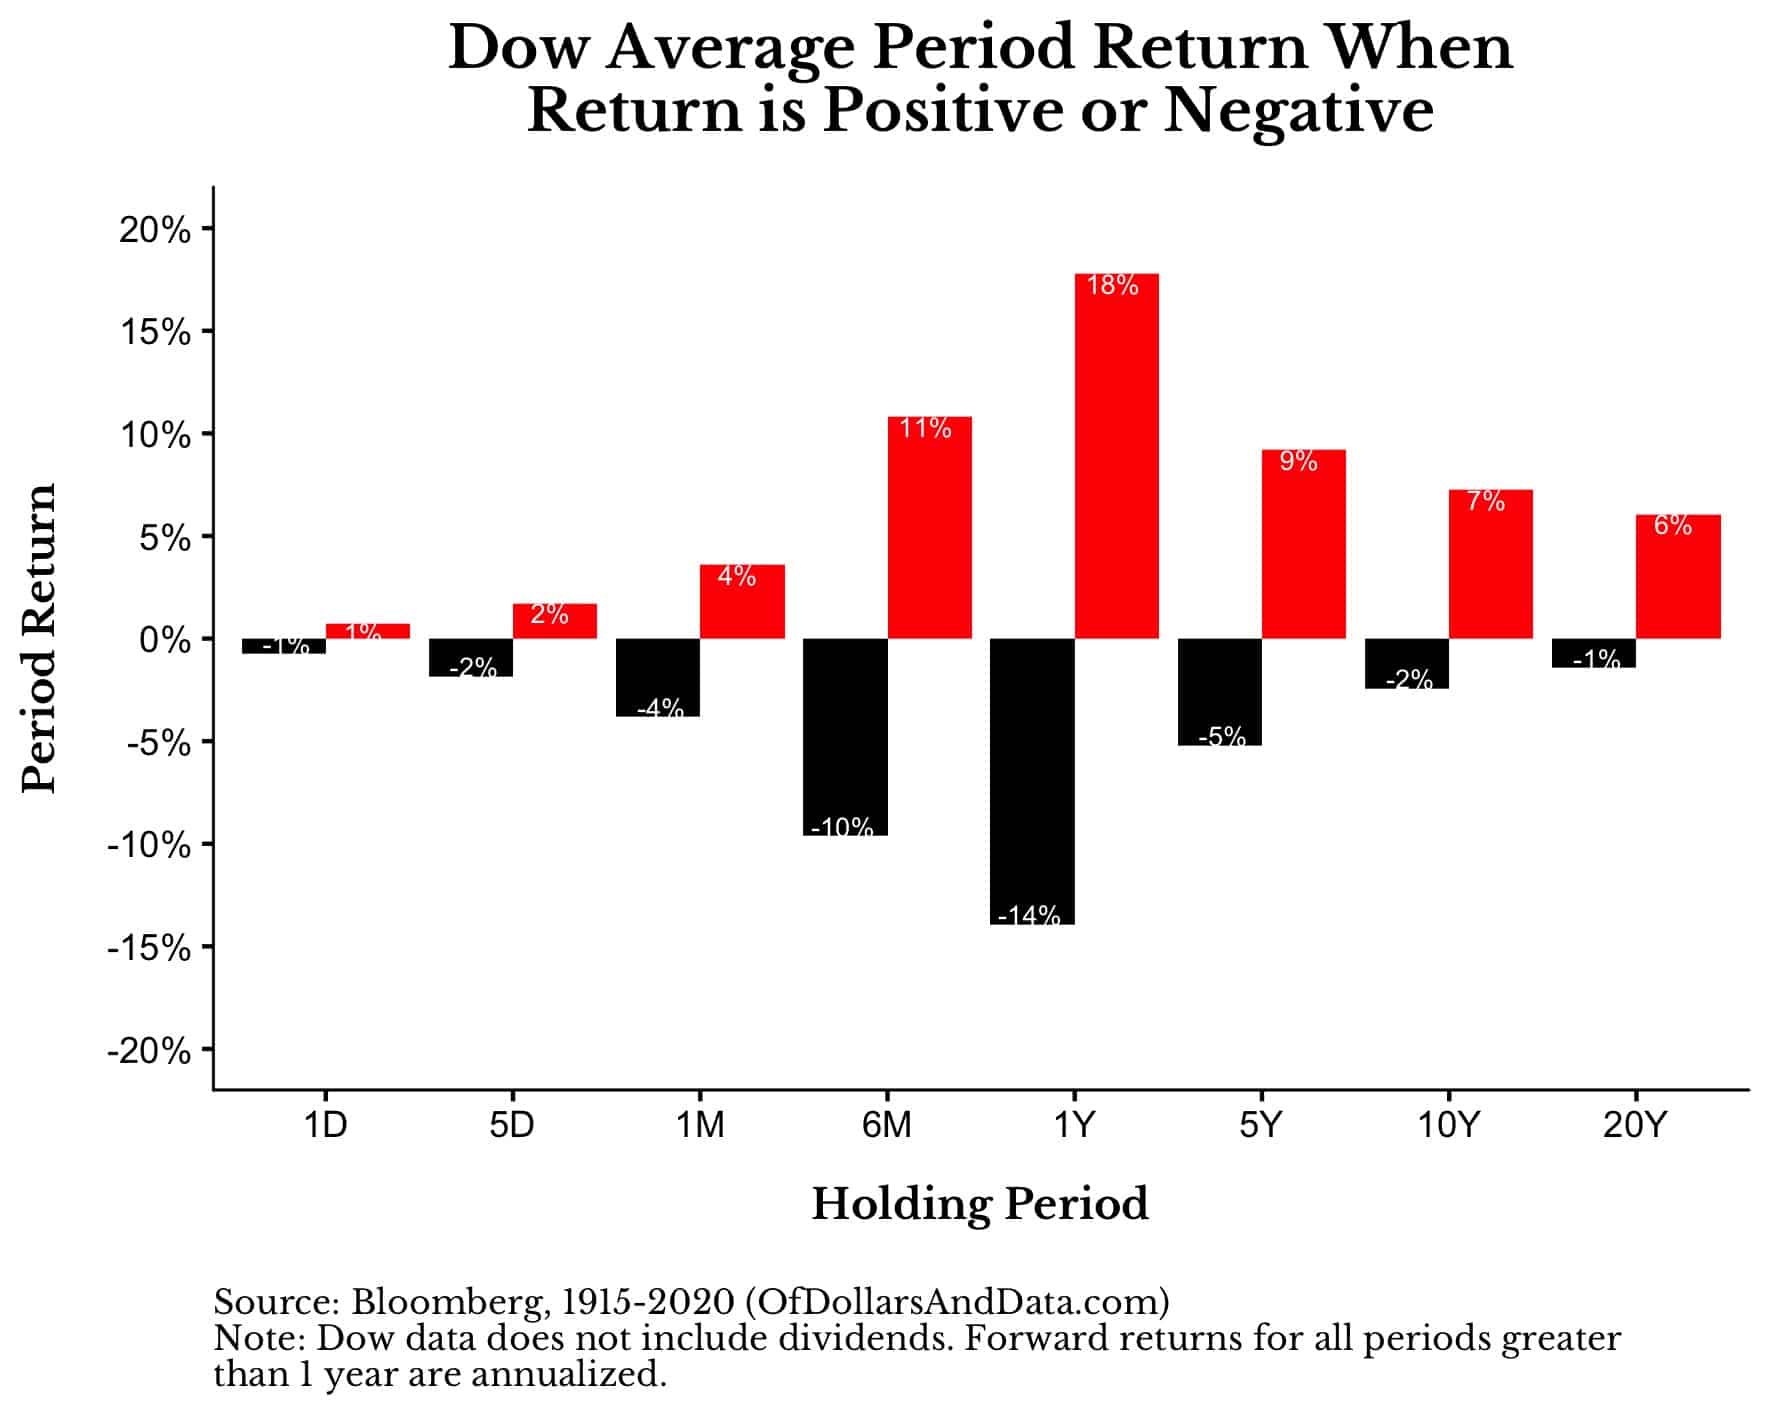 Dow Jones Industrial Average period return when return is positive or negative